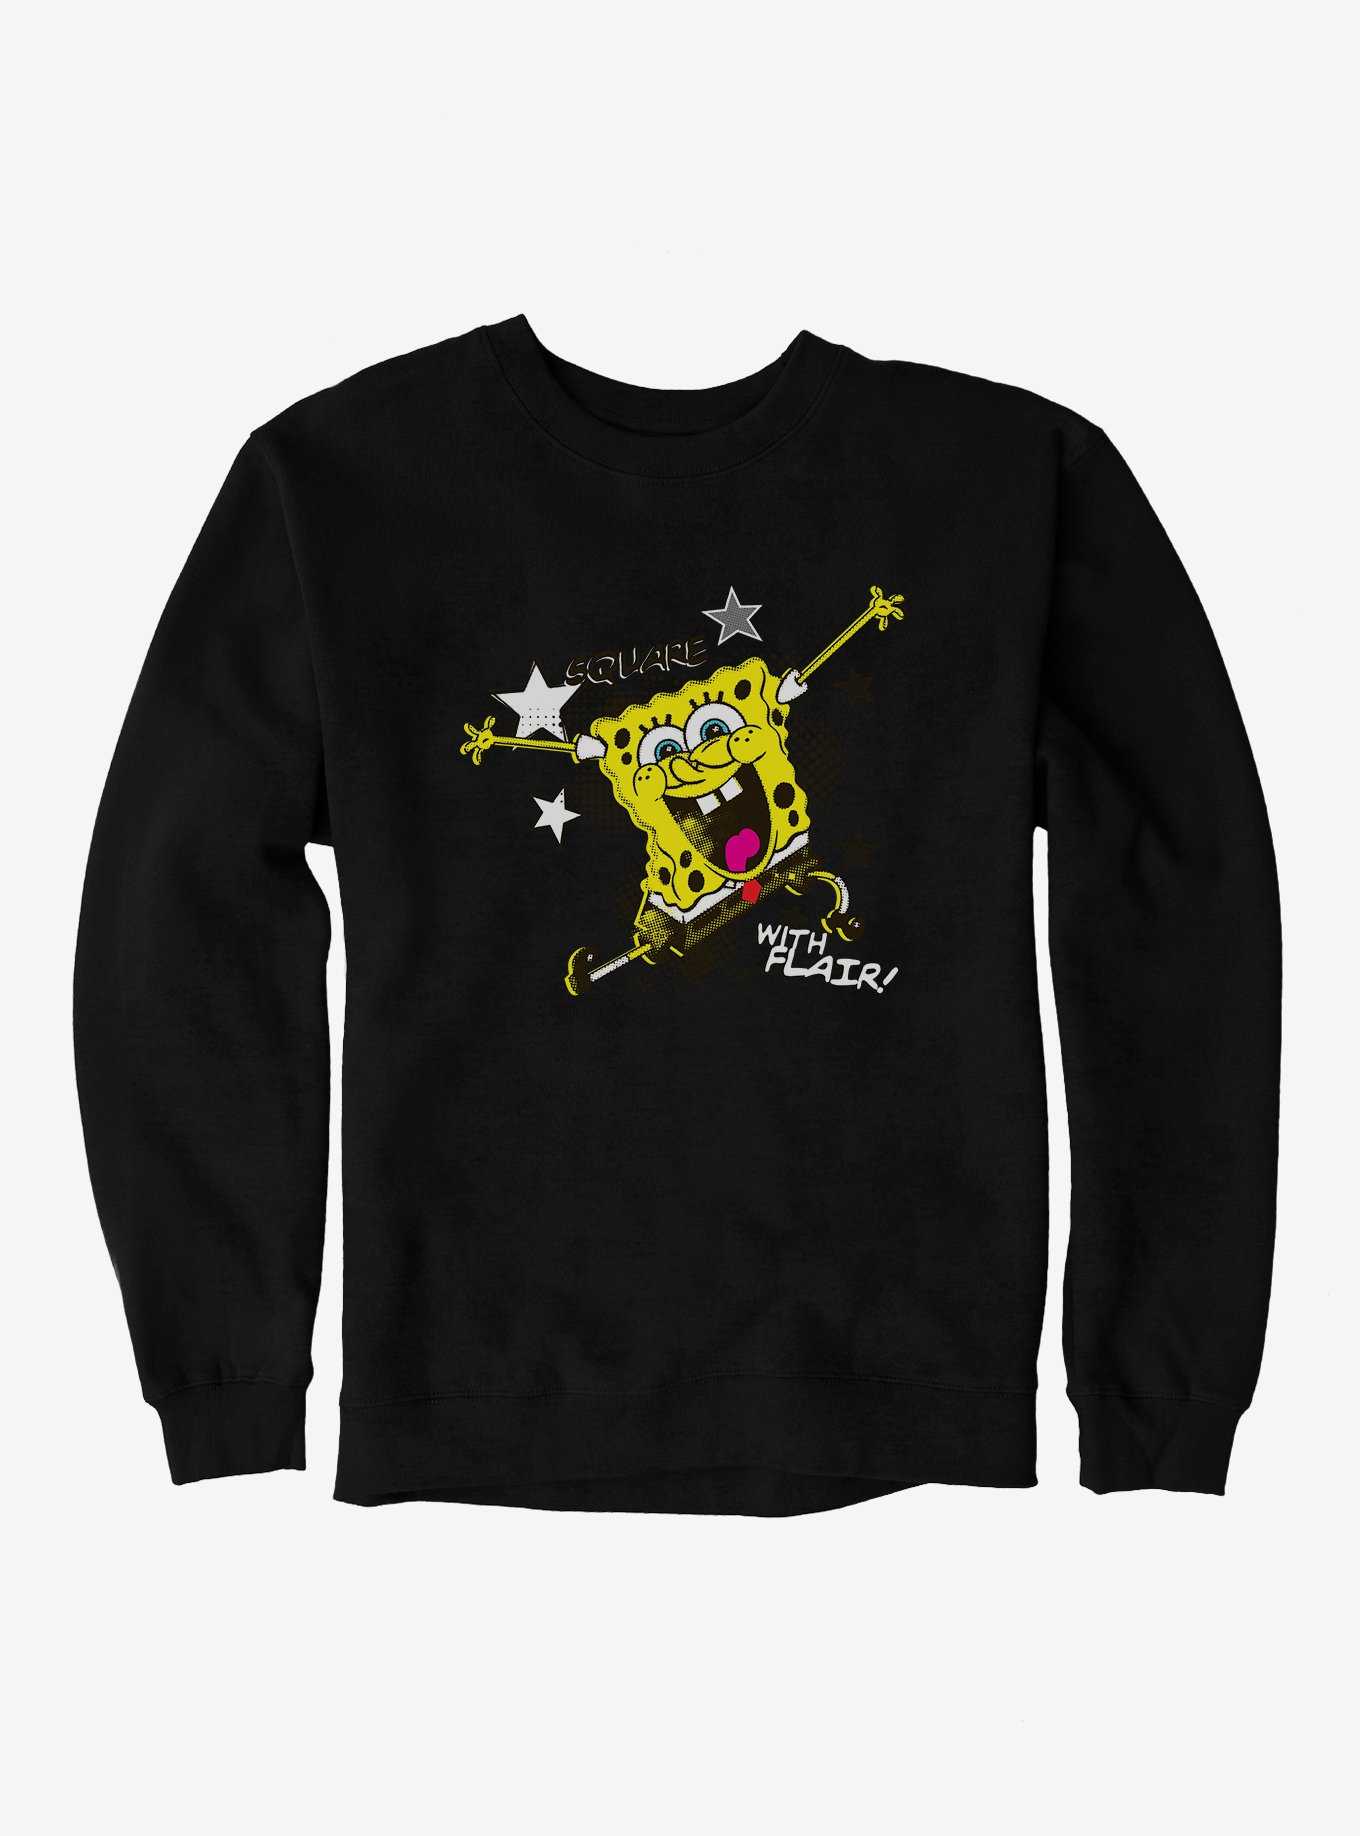 SpongeBob SquarePants Square With Flair Sweatshirt, , hi-res